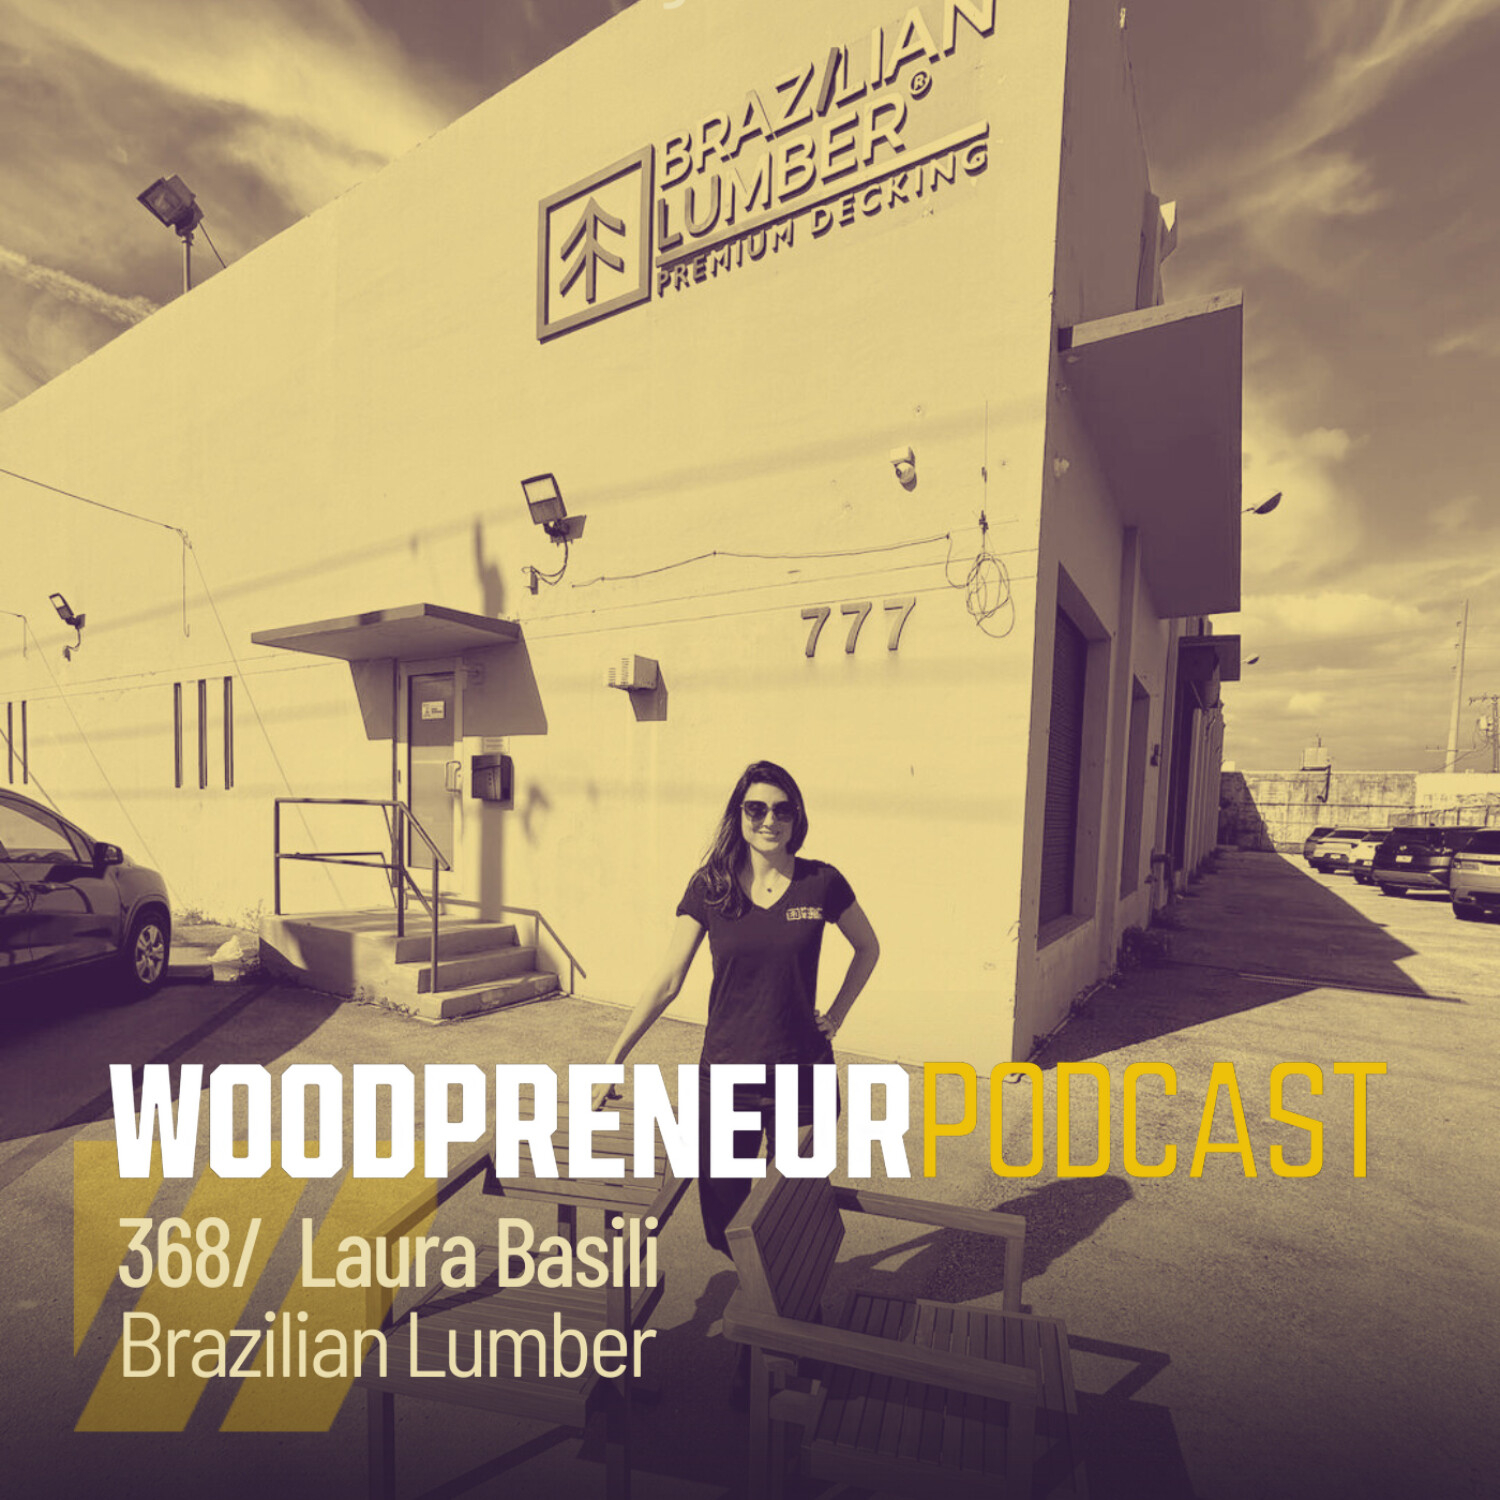 Laura Basili: Brazilian Lumber